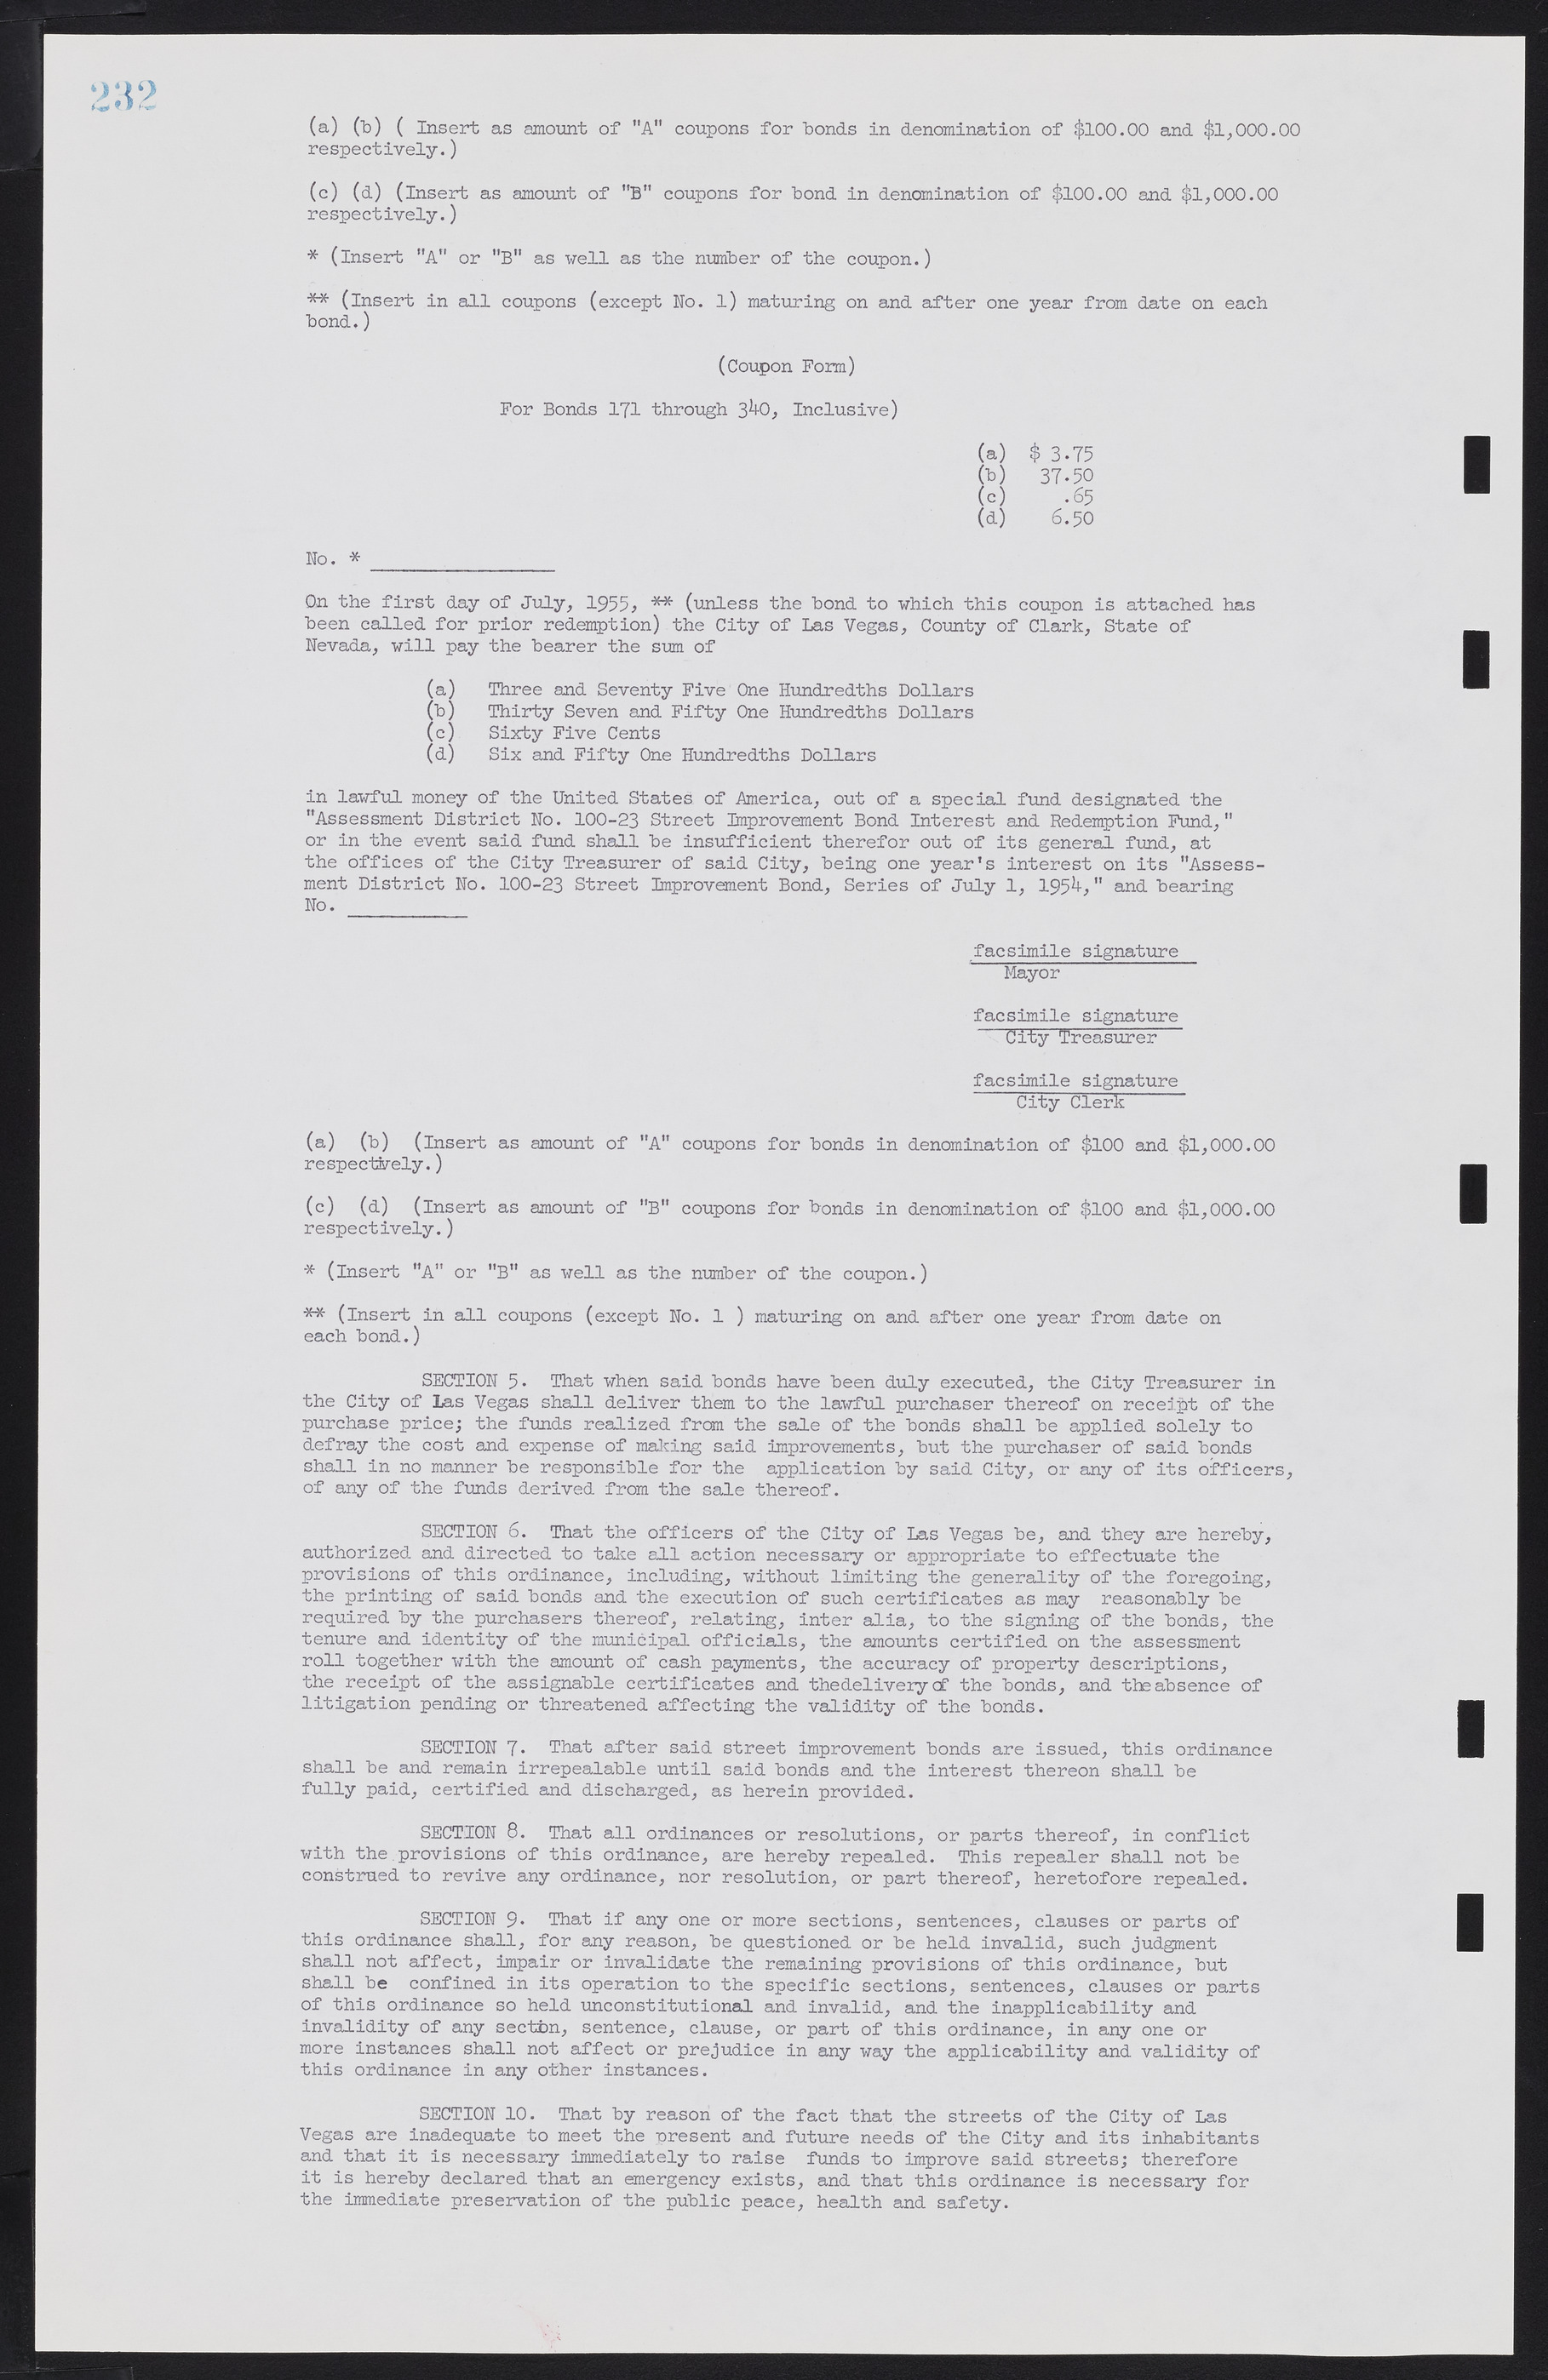 Las Vegas City Commission Minutes, February 17, 1954 to September 21, 1955, lvc000009-238